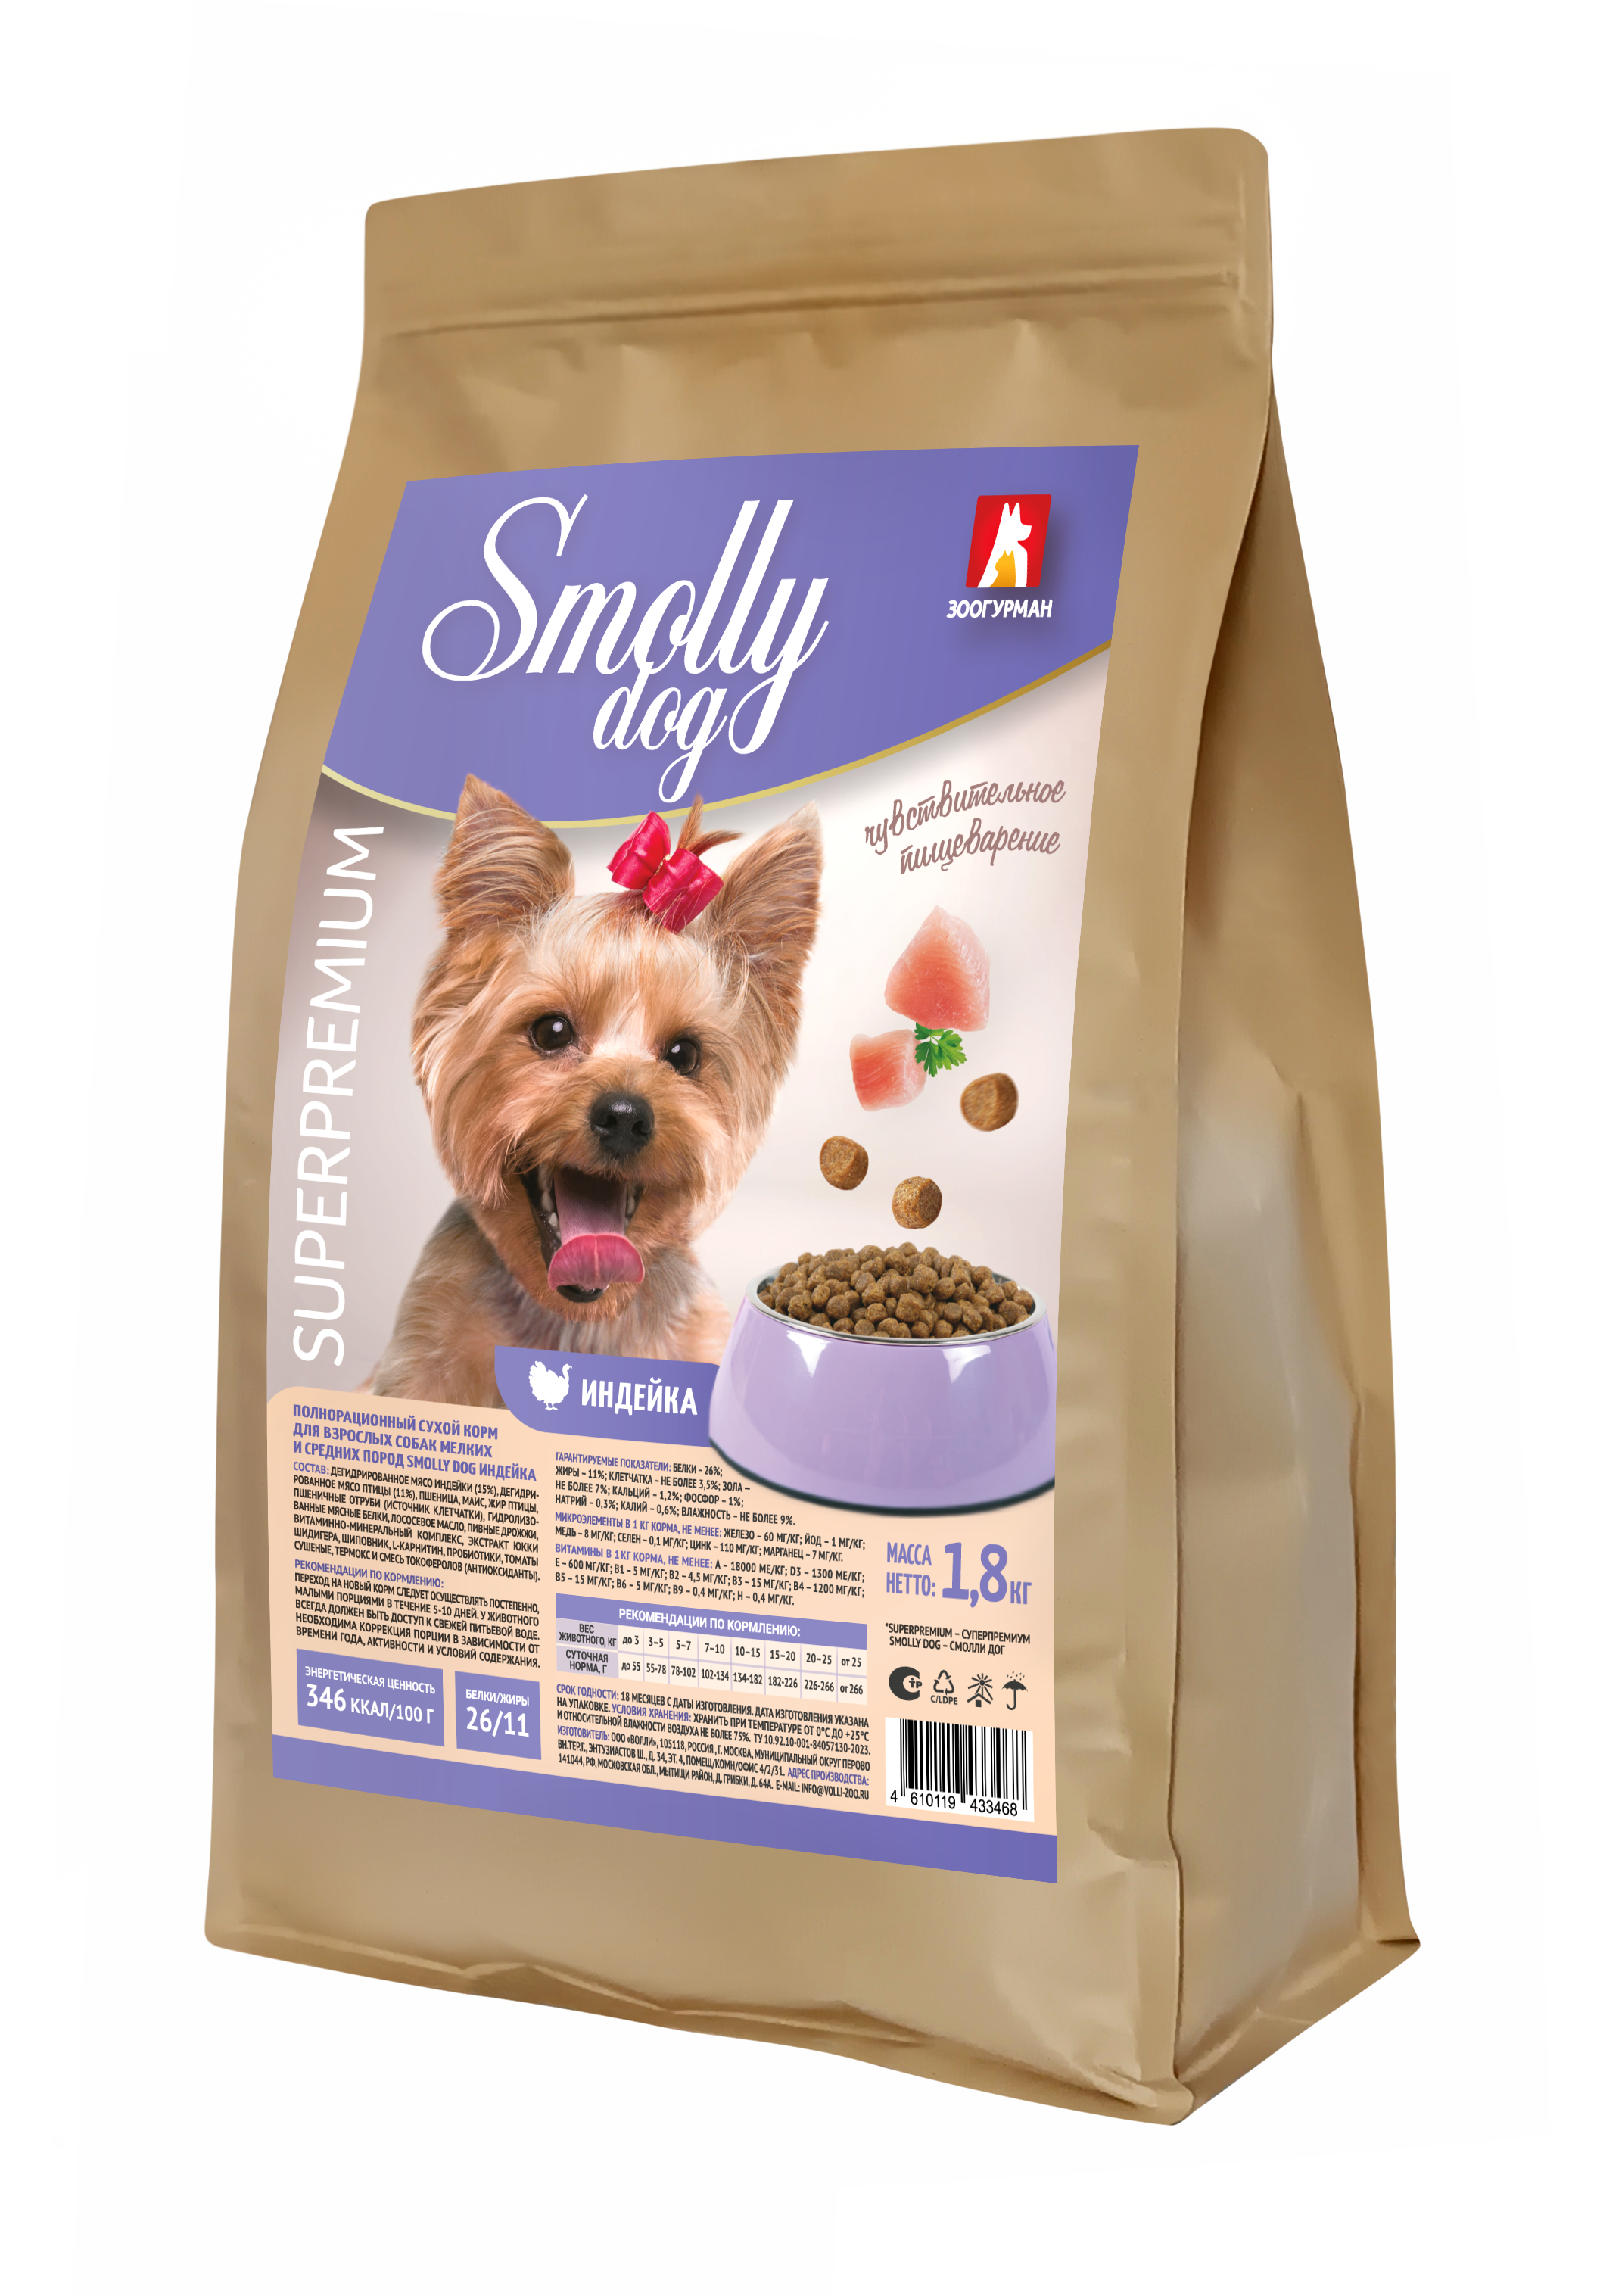 Zoogurman Smolly dog сухой корм для собак с индейкой 1.8кг фото, цены, купить